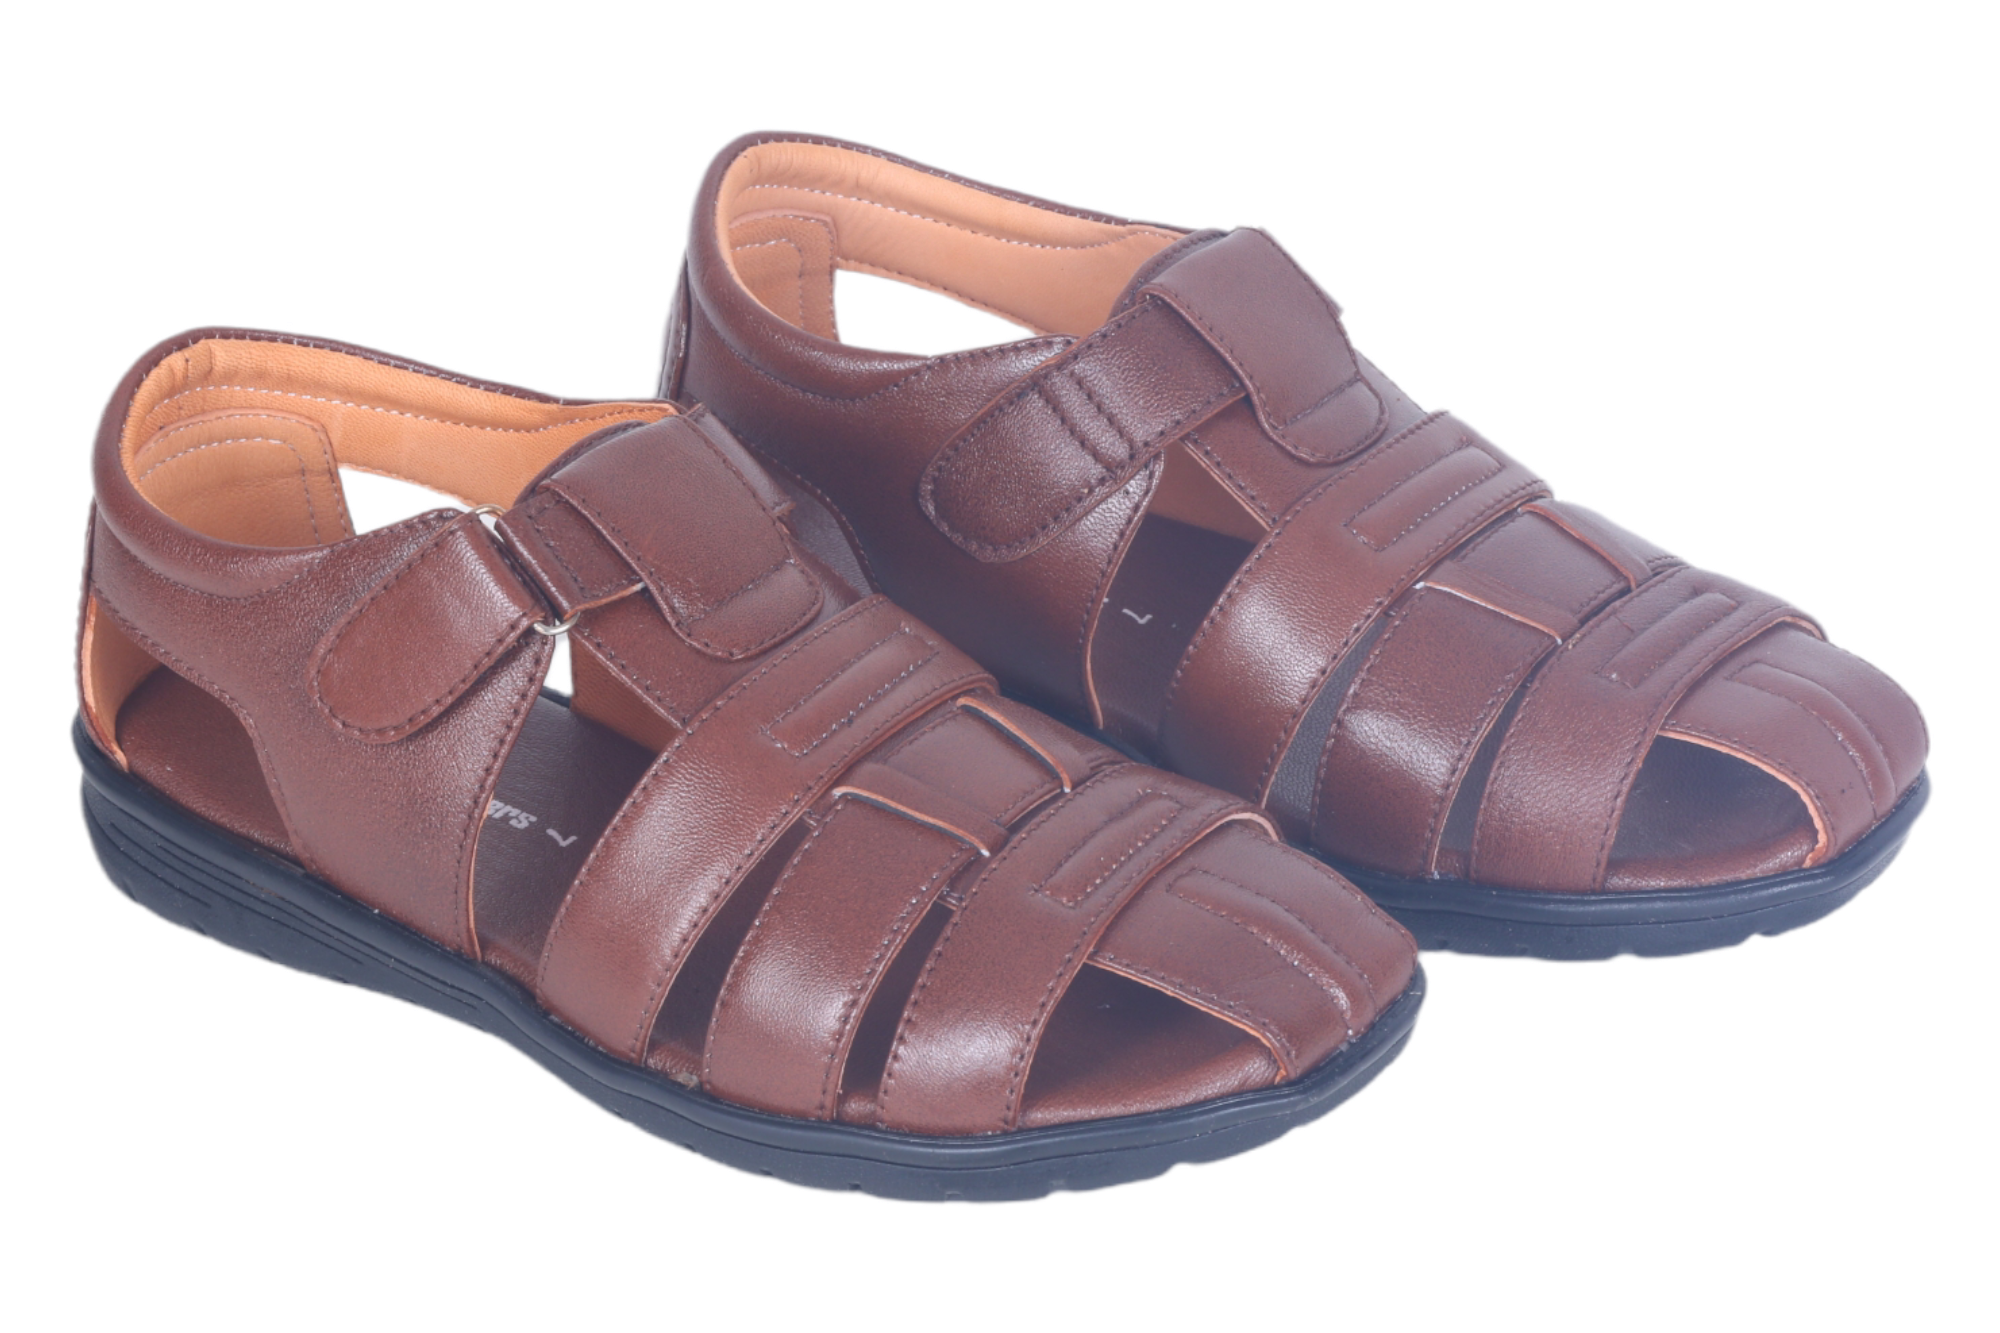 Tan Leather zig-zag sandals for Men - Mardi Gras